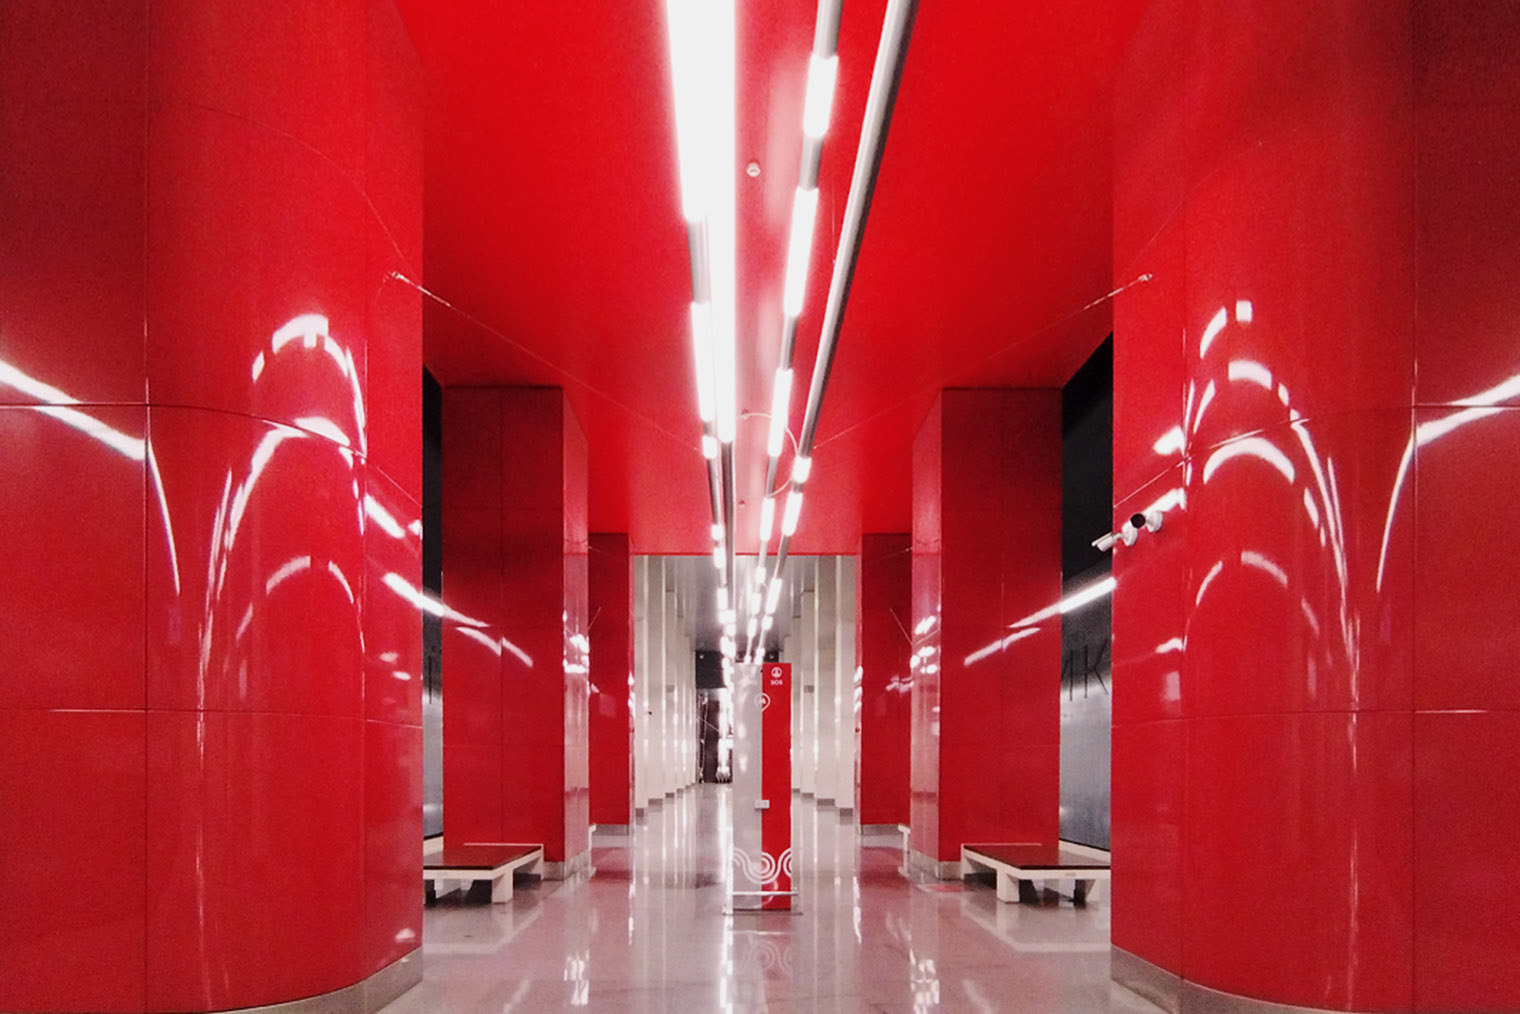 Визуальная доминанта — арка ярко-красного цвета в стиле авангарда